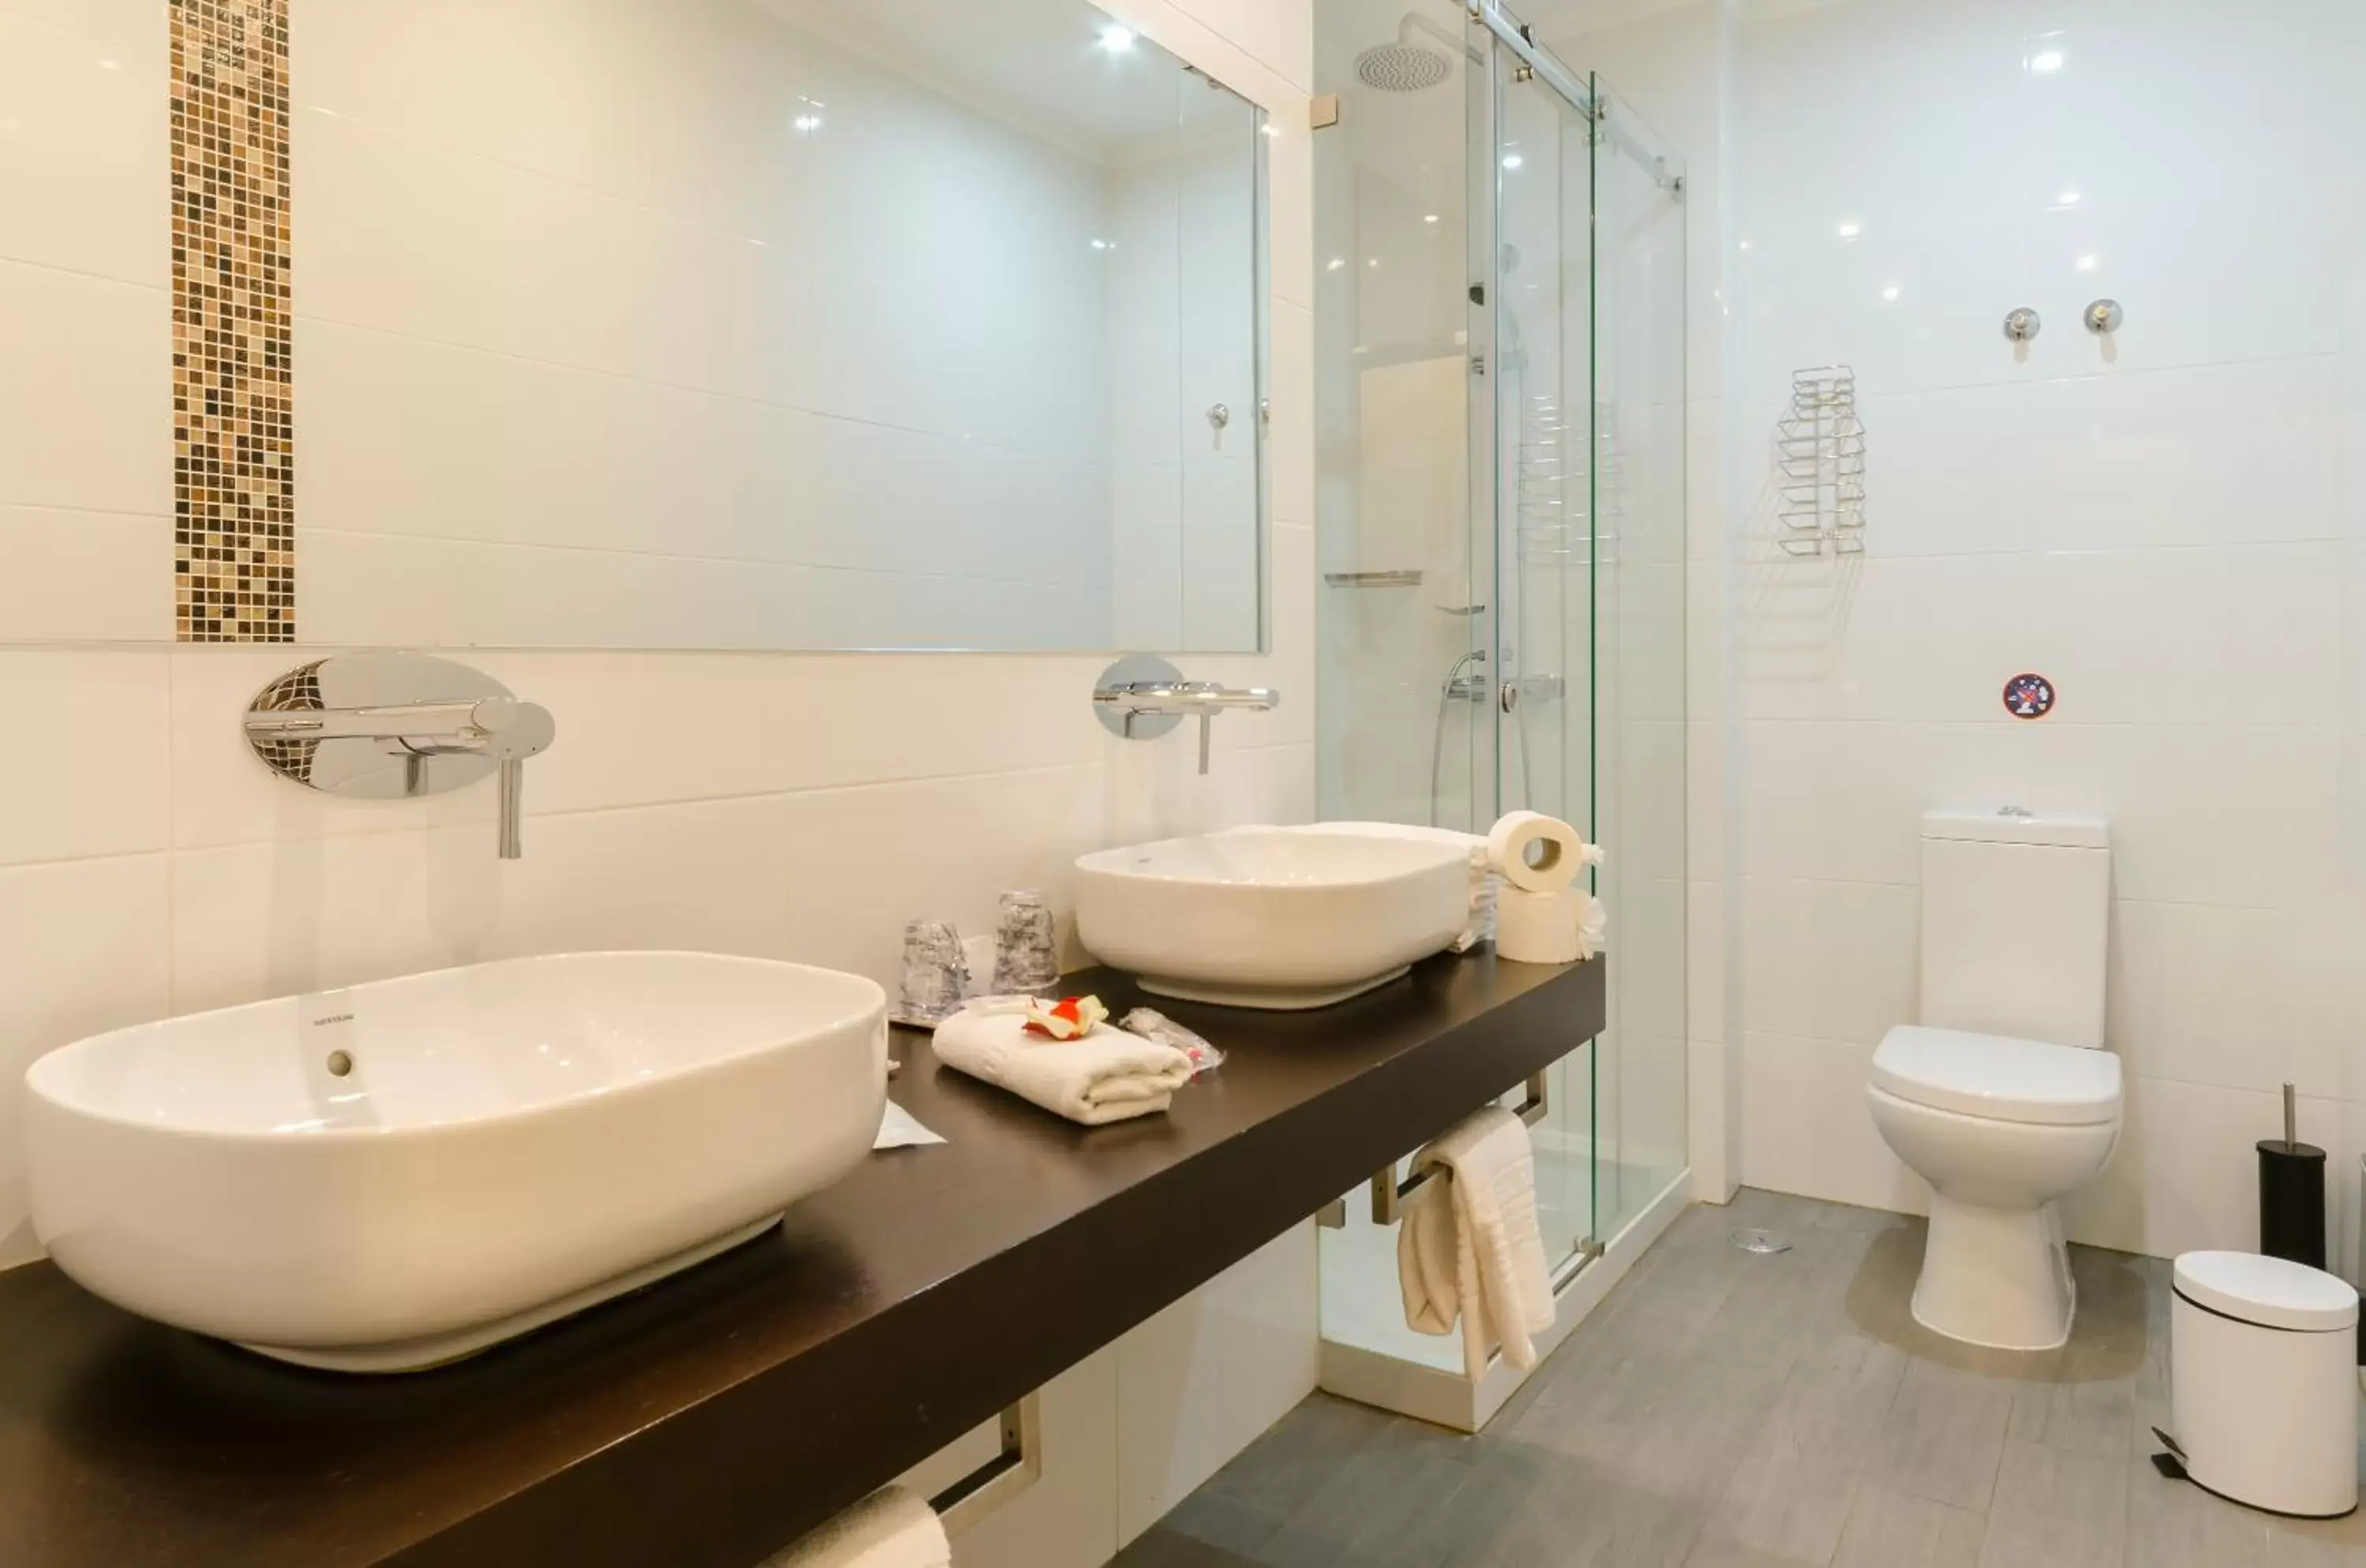 Photo of the whole room, Bathroom in Hotel Borges Chiado